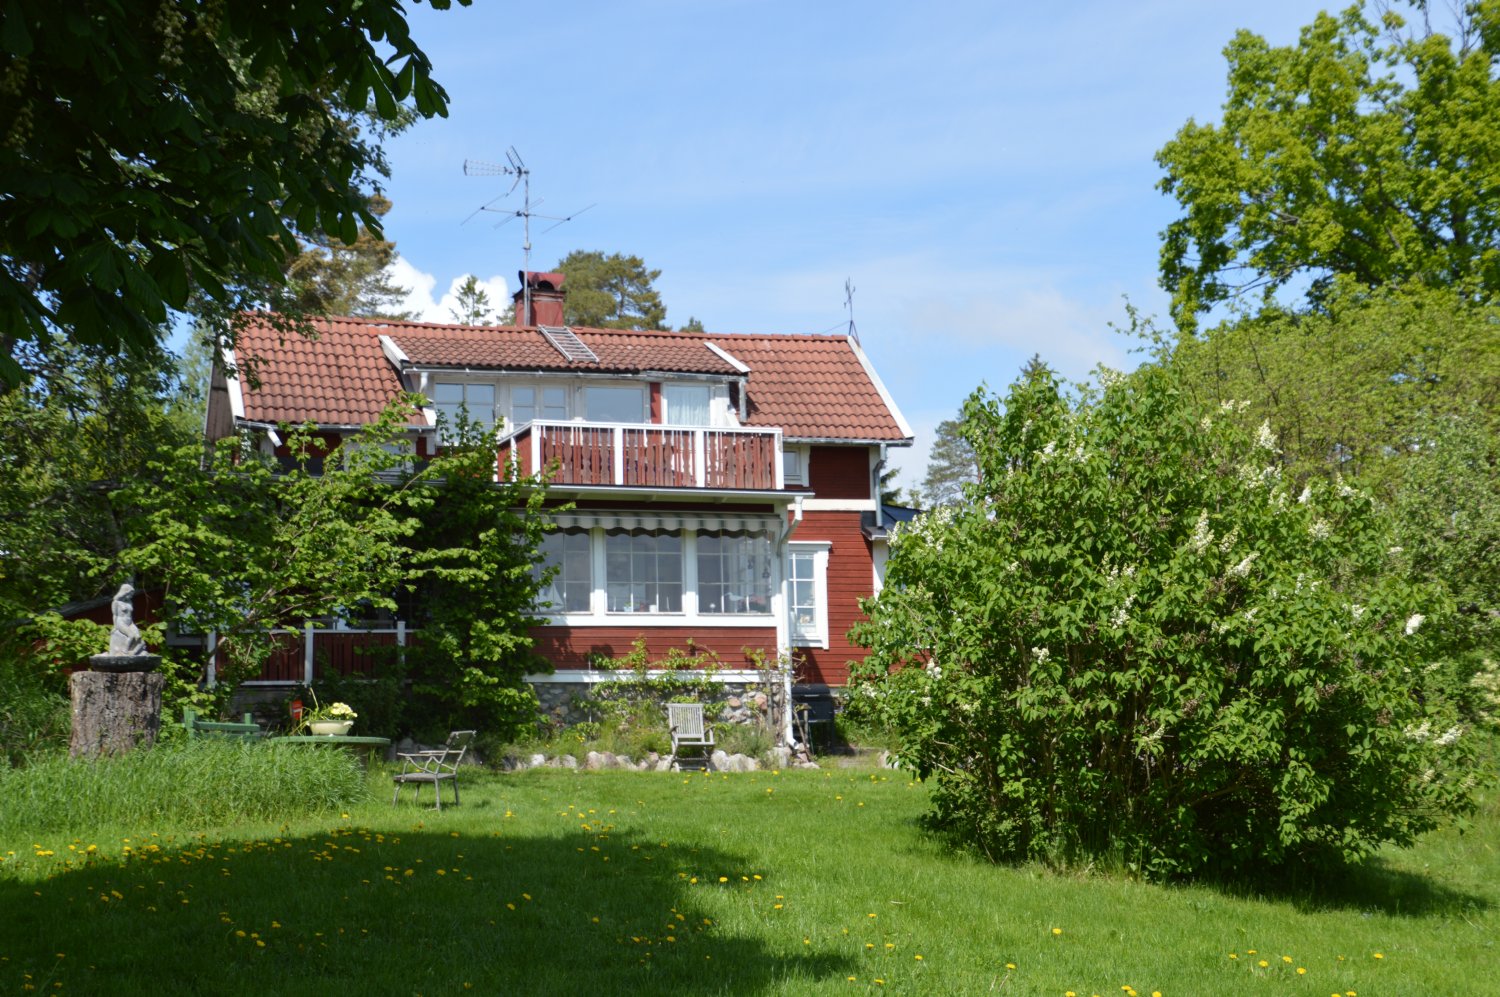 Rosenvik, Ljusterö